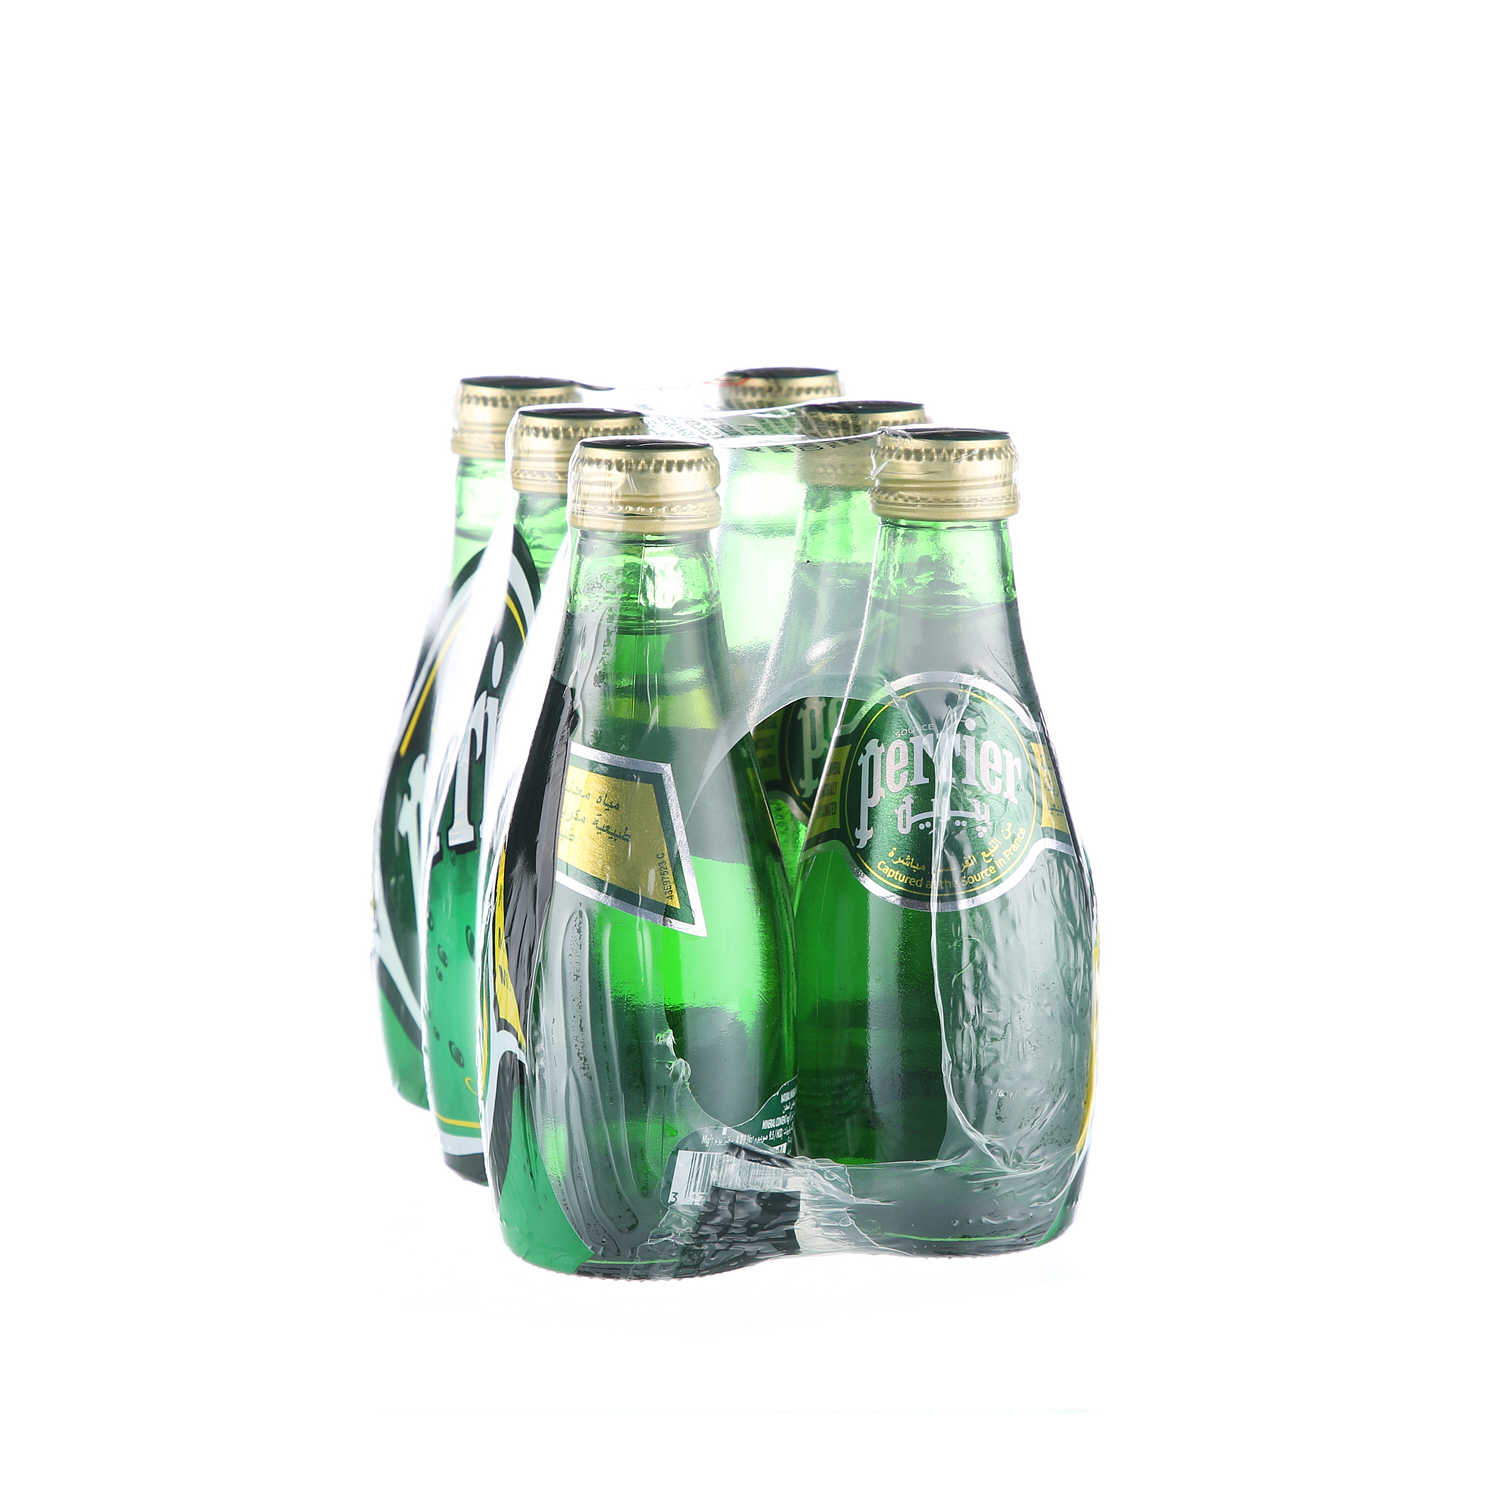 Perrier Water Regular 200 ml × 6 Pack